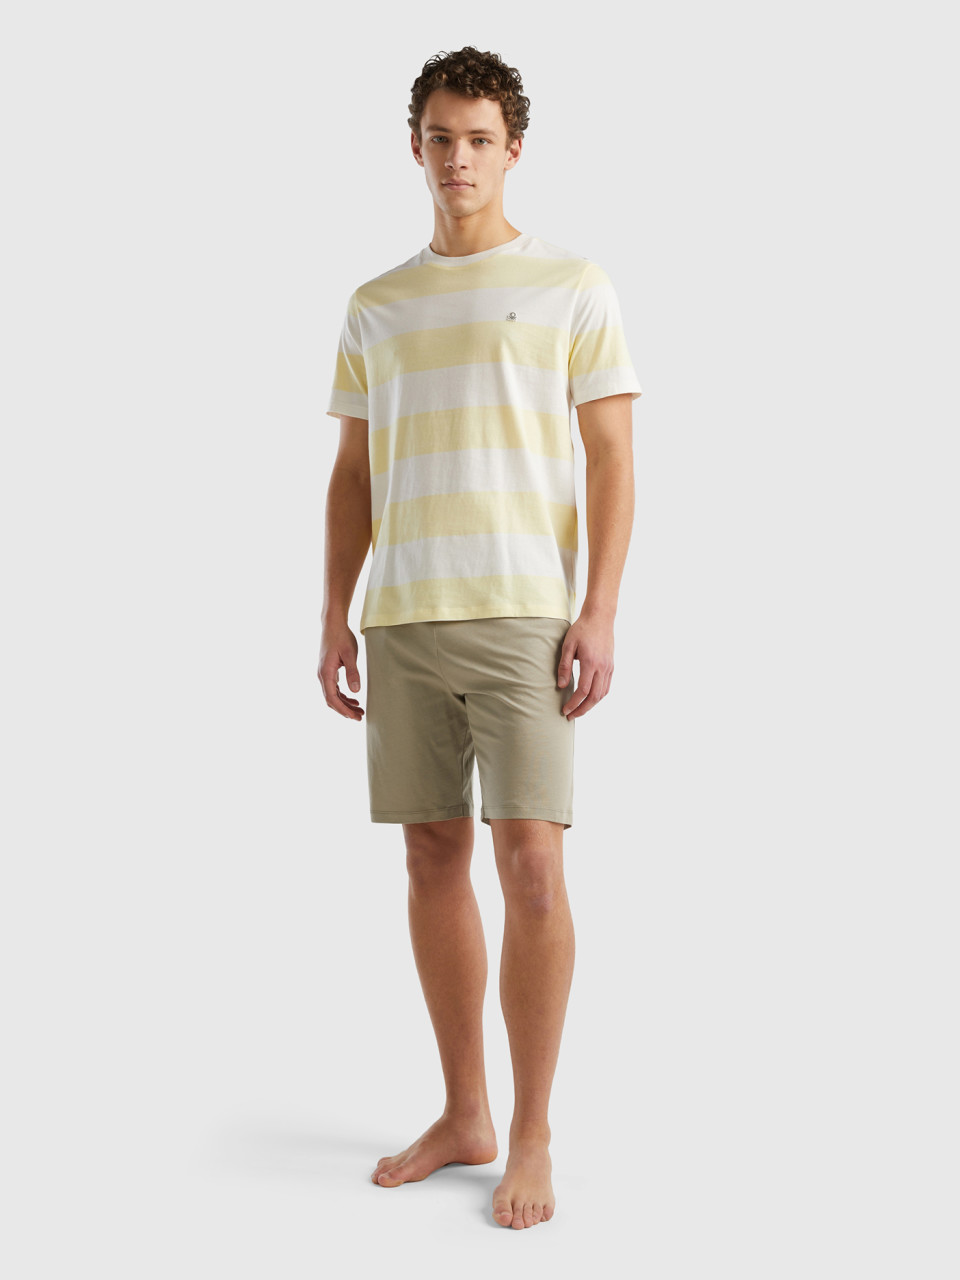 Benetton, Pyjamas With Striped T-shirt, Beige, Men